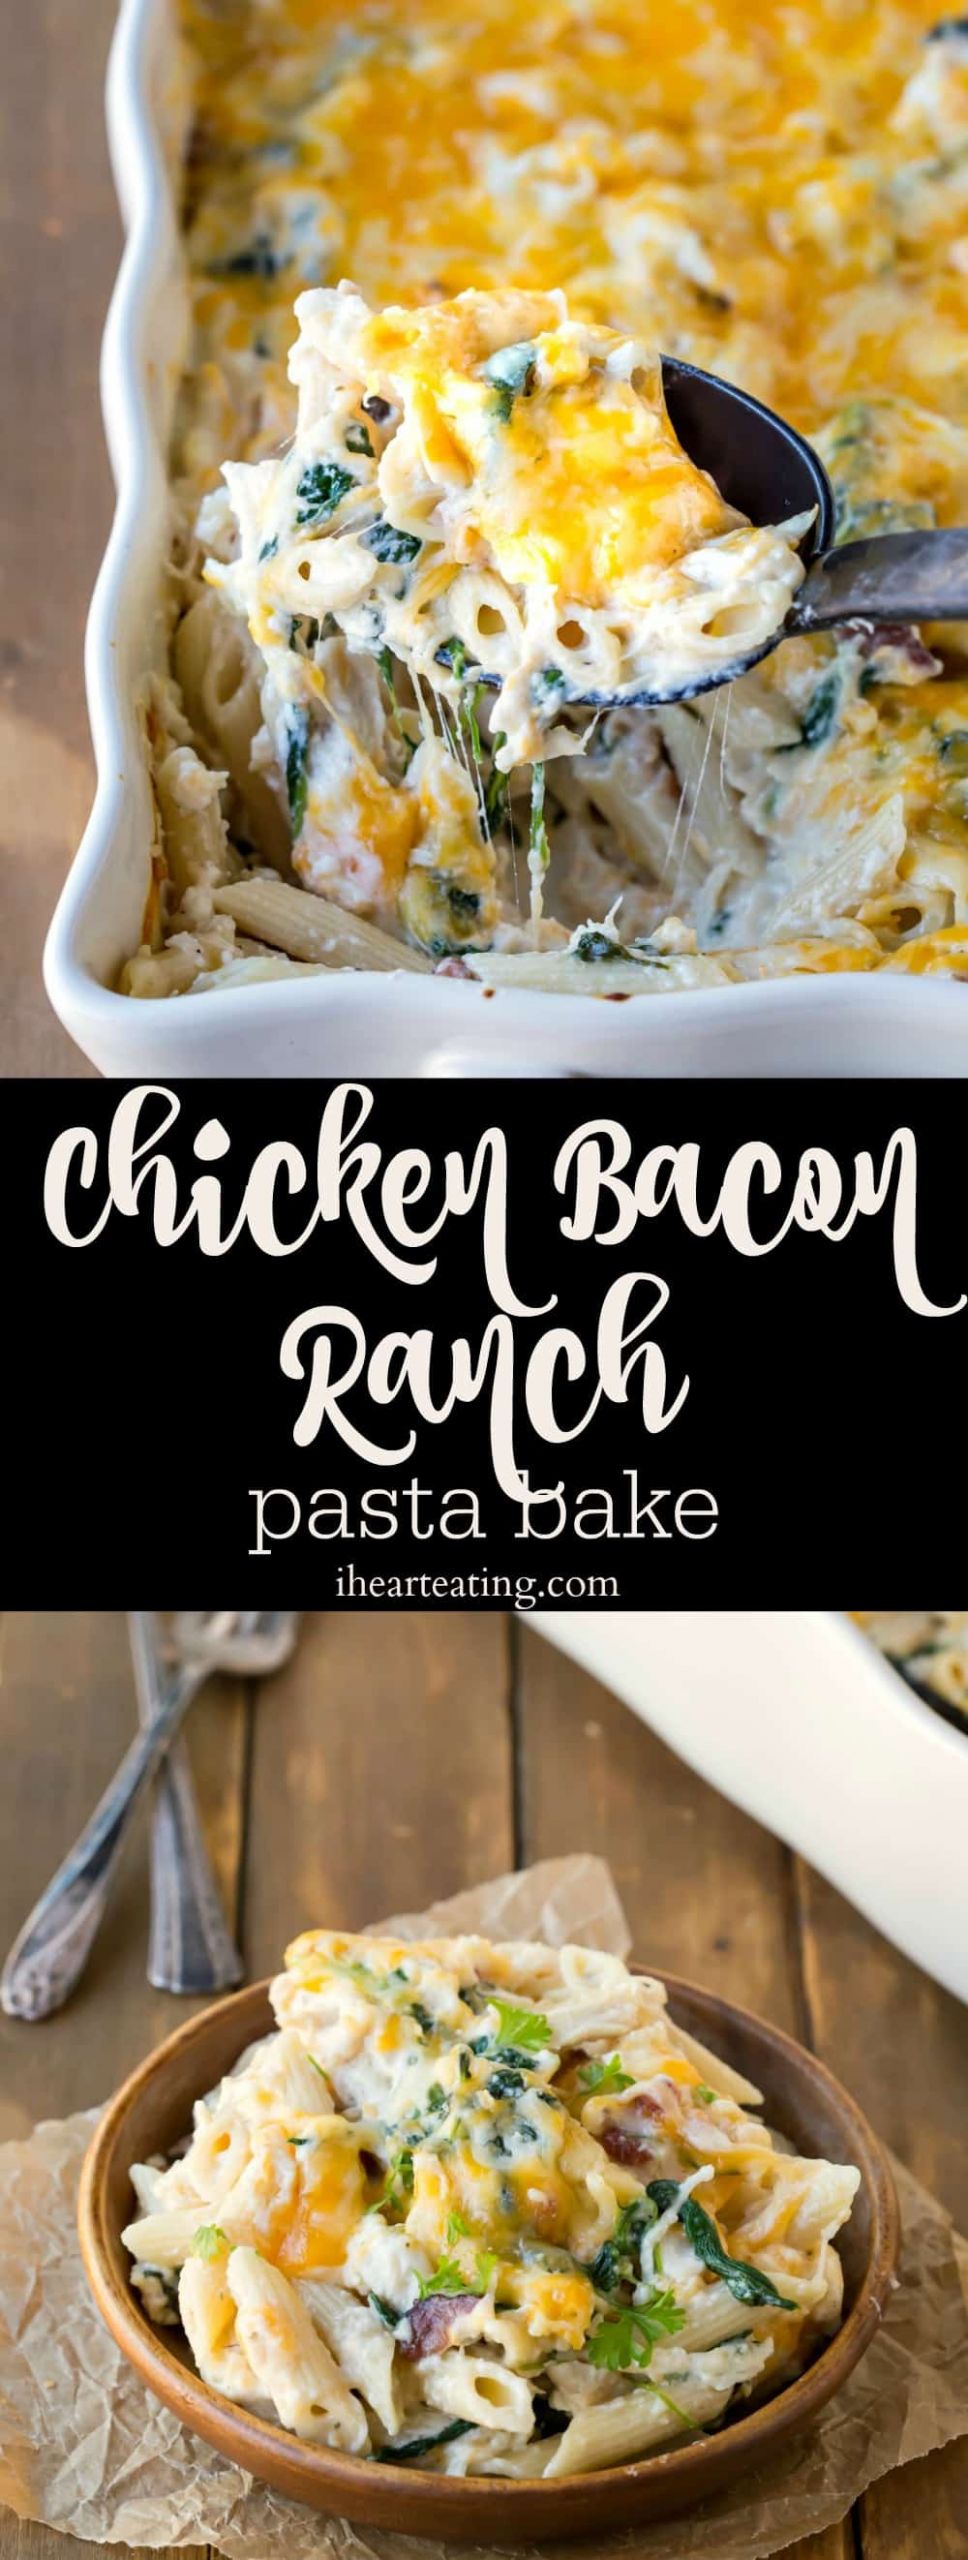 Chicken Bacon Ranch Pasta Recipes
 Chicken Bacon Ranch Pasta Bake I Heart Eating